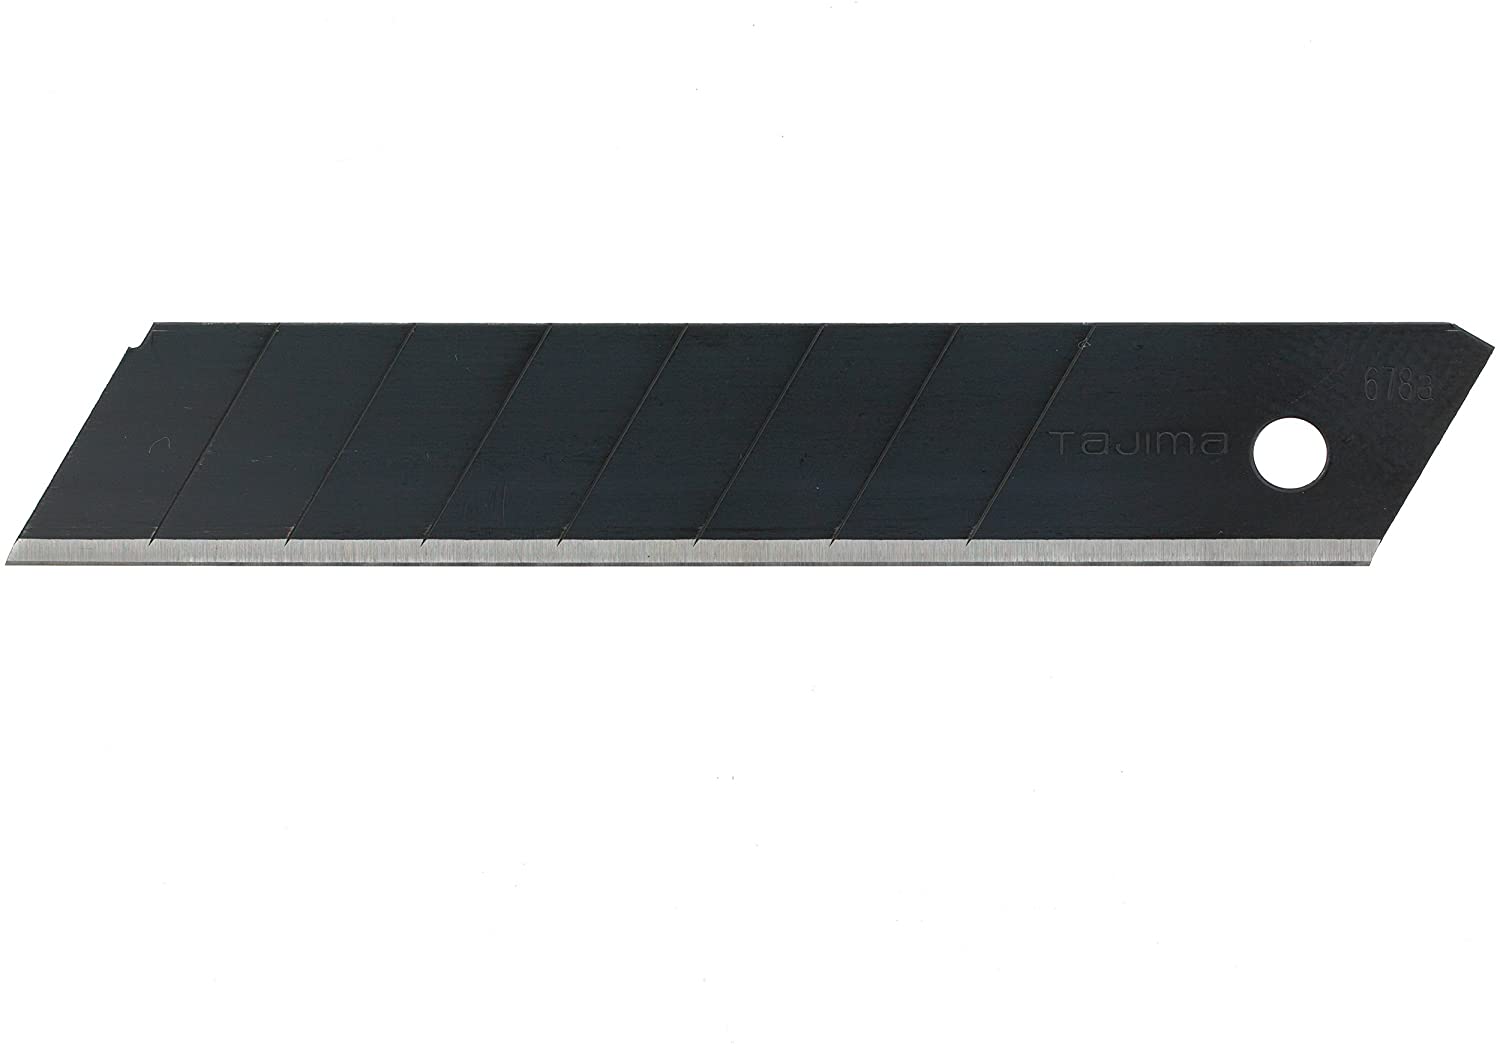 Tajima Endura Blade Snap-Off Blades Replacement Blades Cutter Blades 18 - 22 mm, LCB50RB-50H